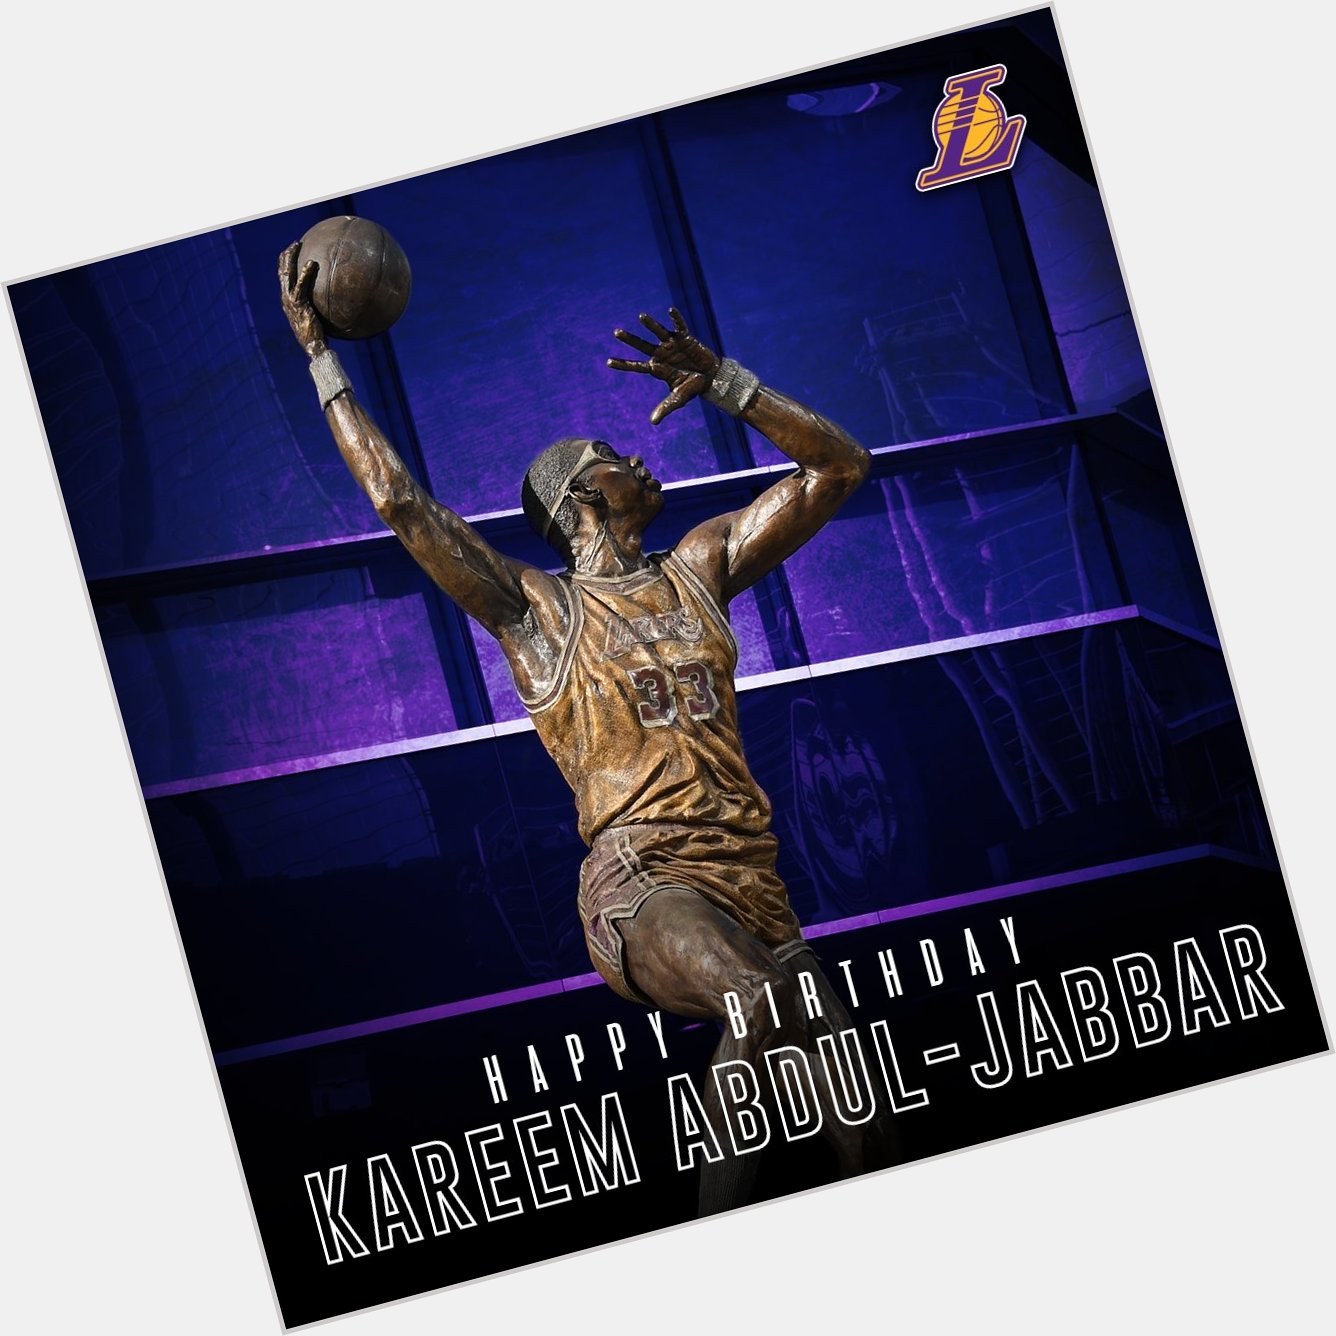 Happy Birthday to Lakers legend Kareem Abdul-Jabbar! 